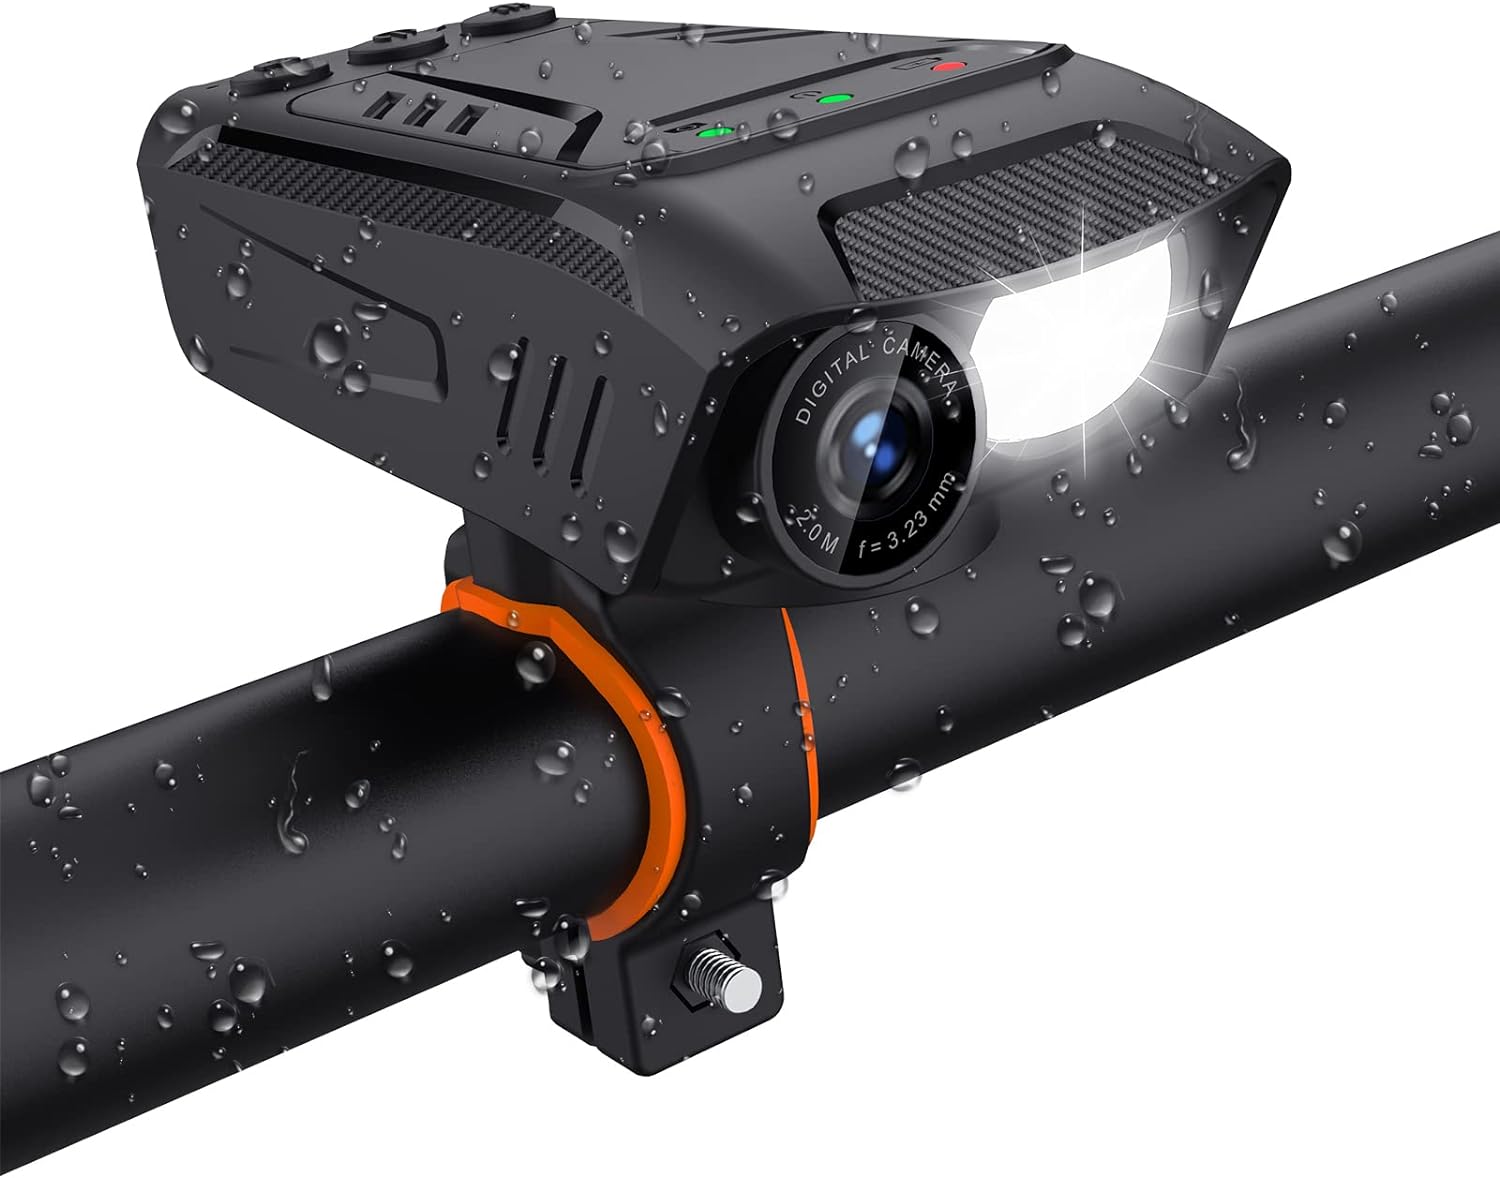  Bike Camera, Bike Light, Electric Bike Horn 3 in 1, 1080P 30FPS Ultra HD Video, Waterproof IPX5, Action Camera with 32G Memory Card 